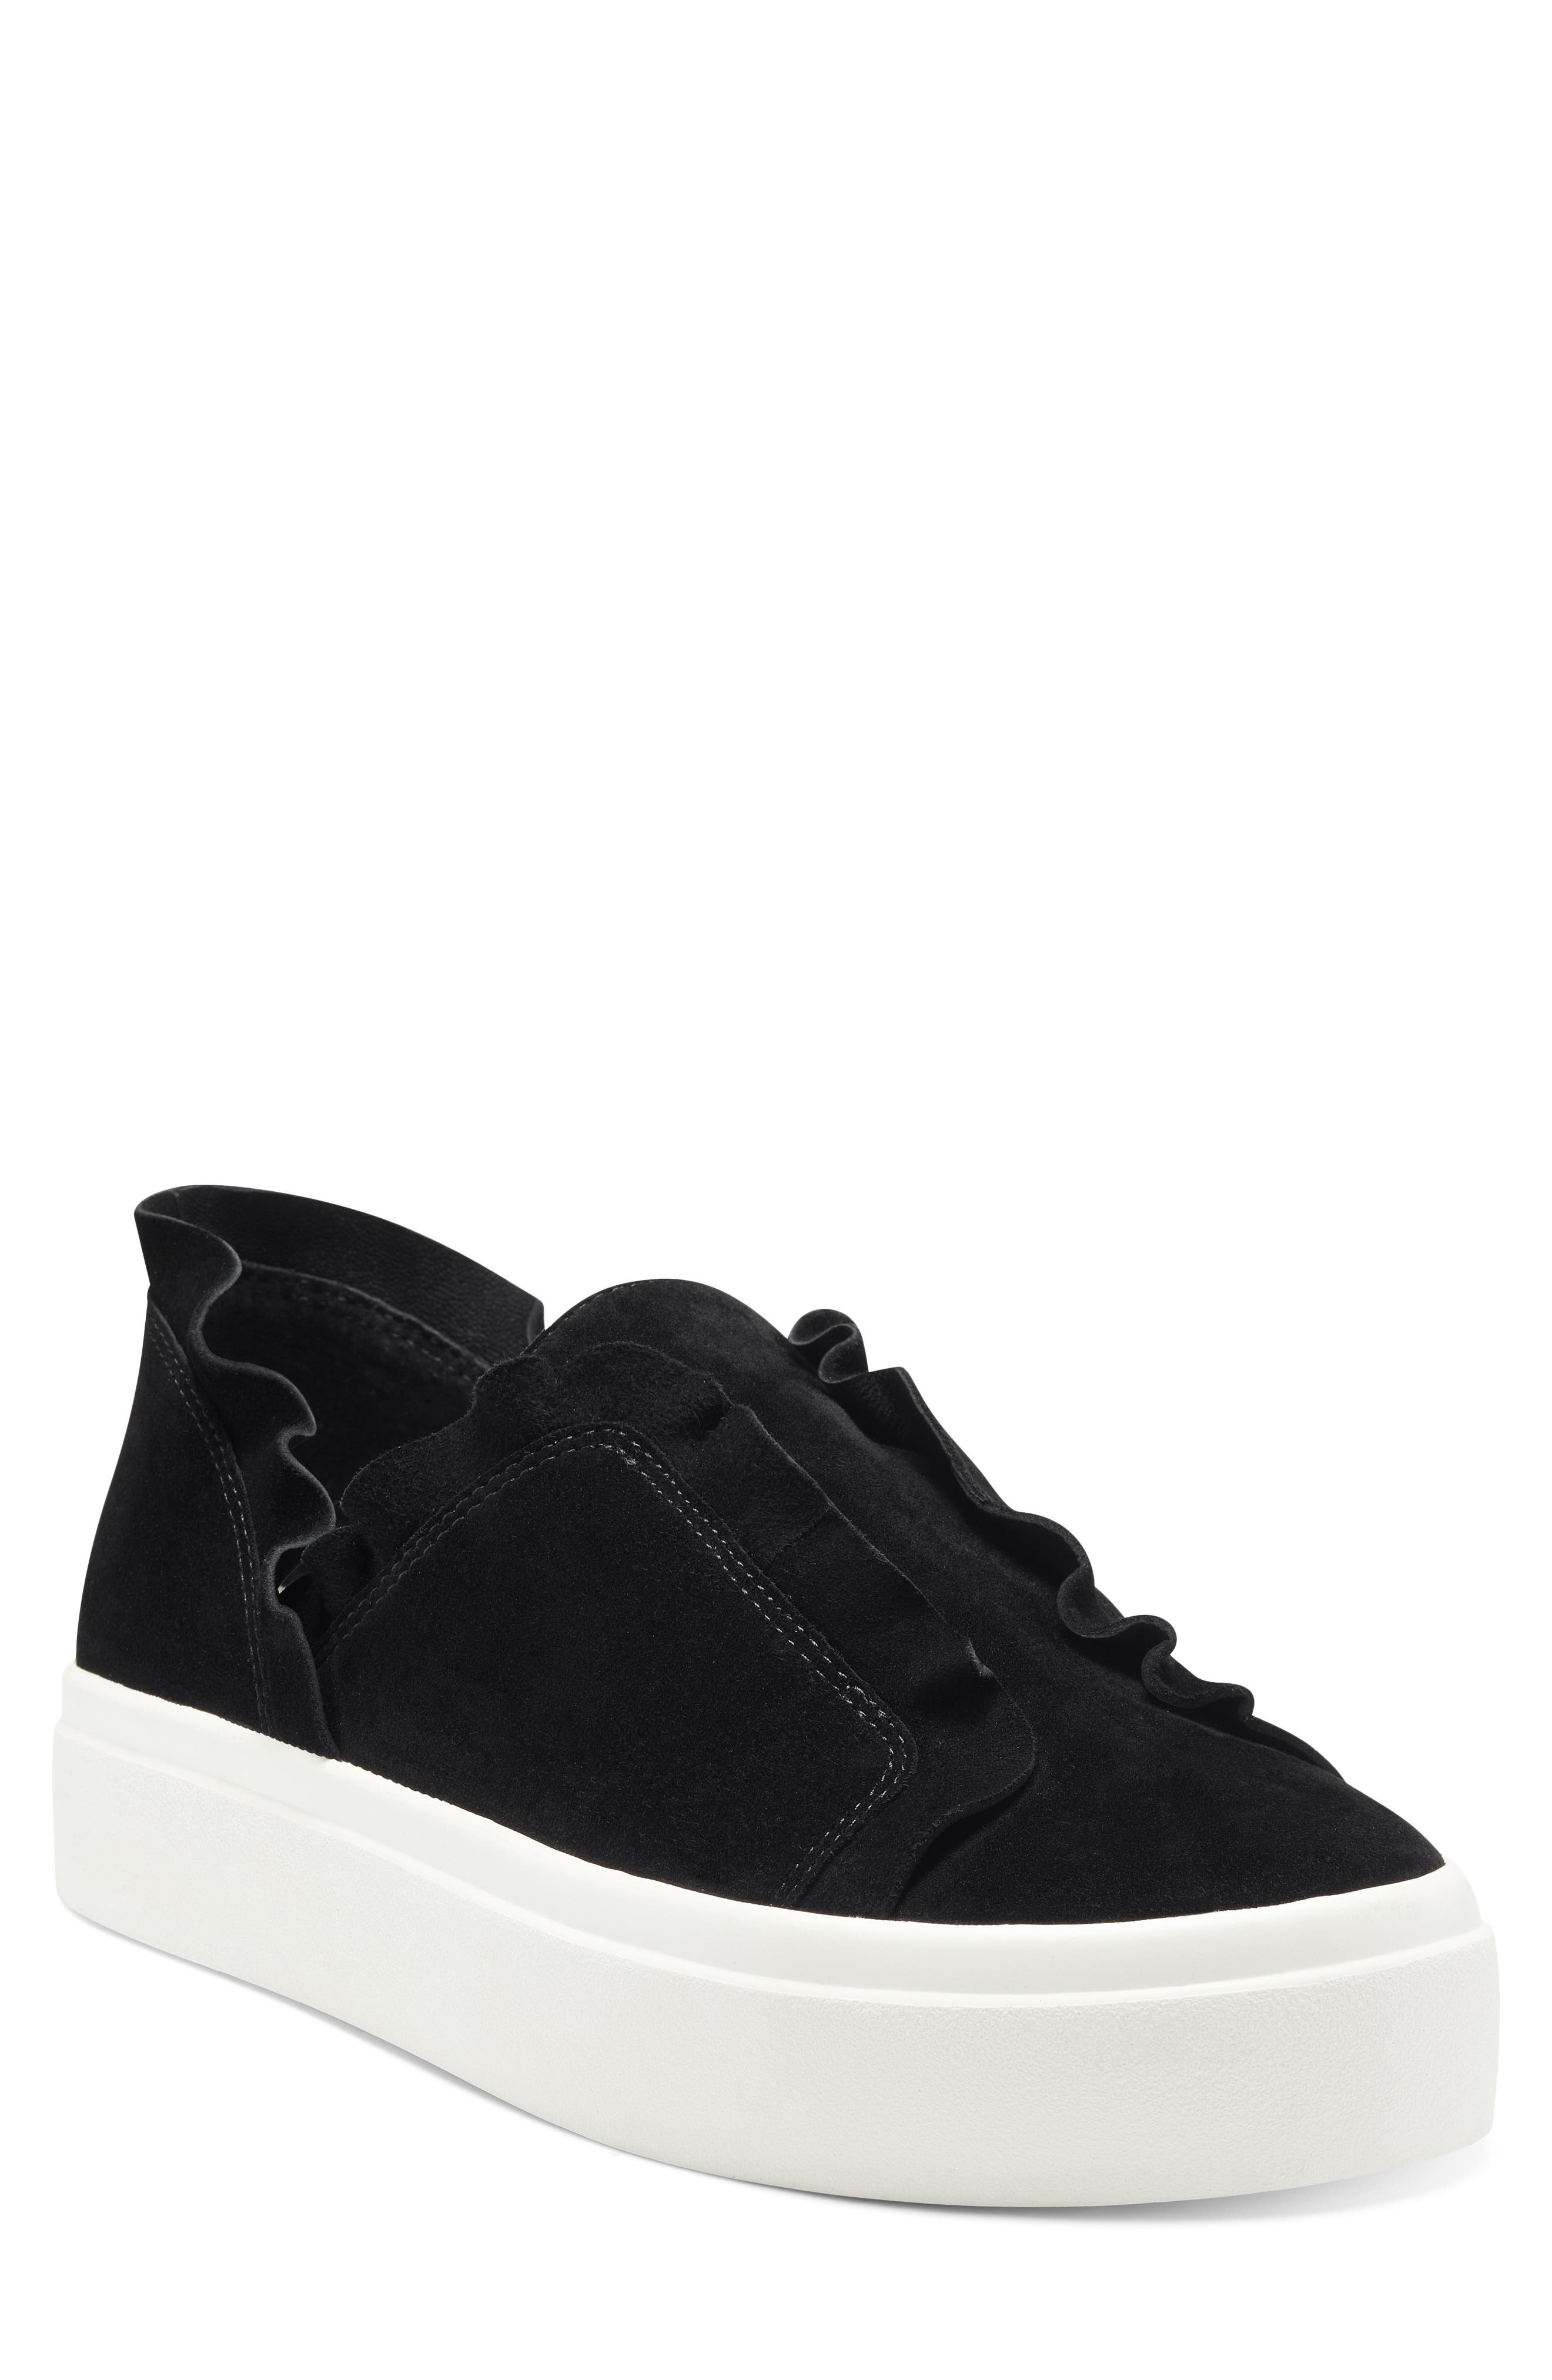 black slip on sneakers with black soles